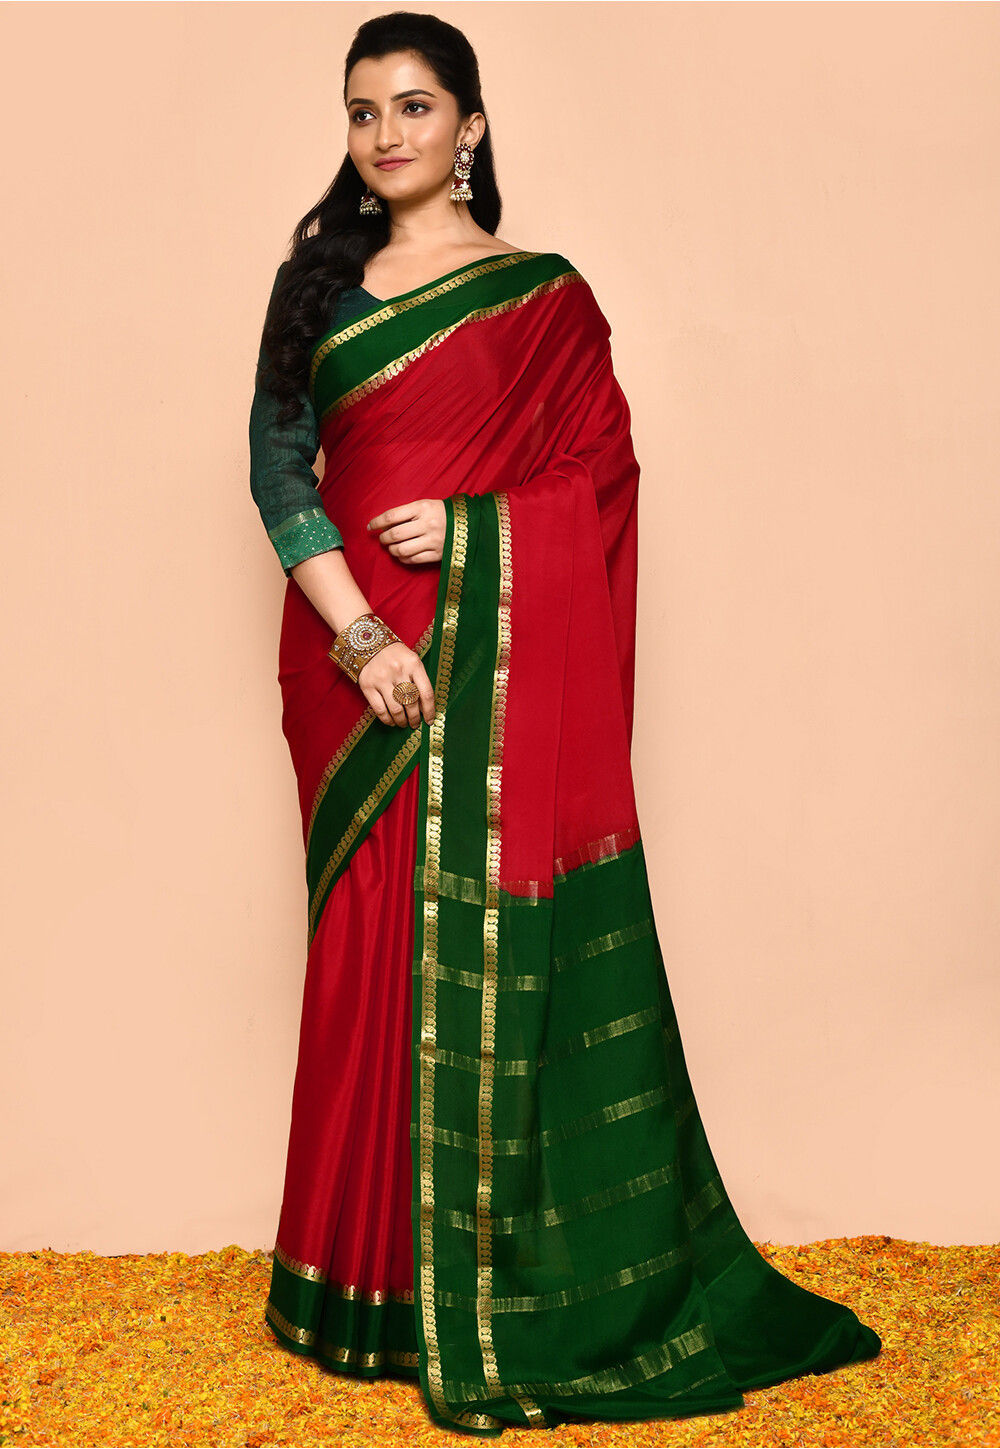 Reveal more than 135 mysore silk sarees super hot